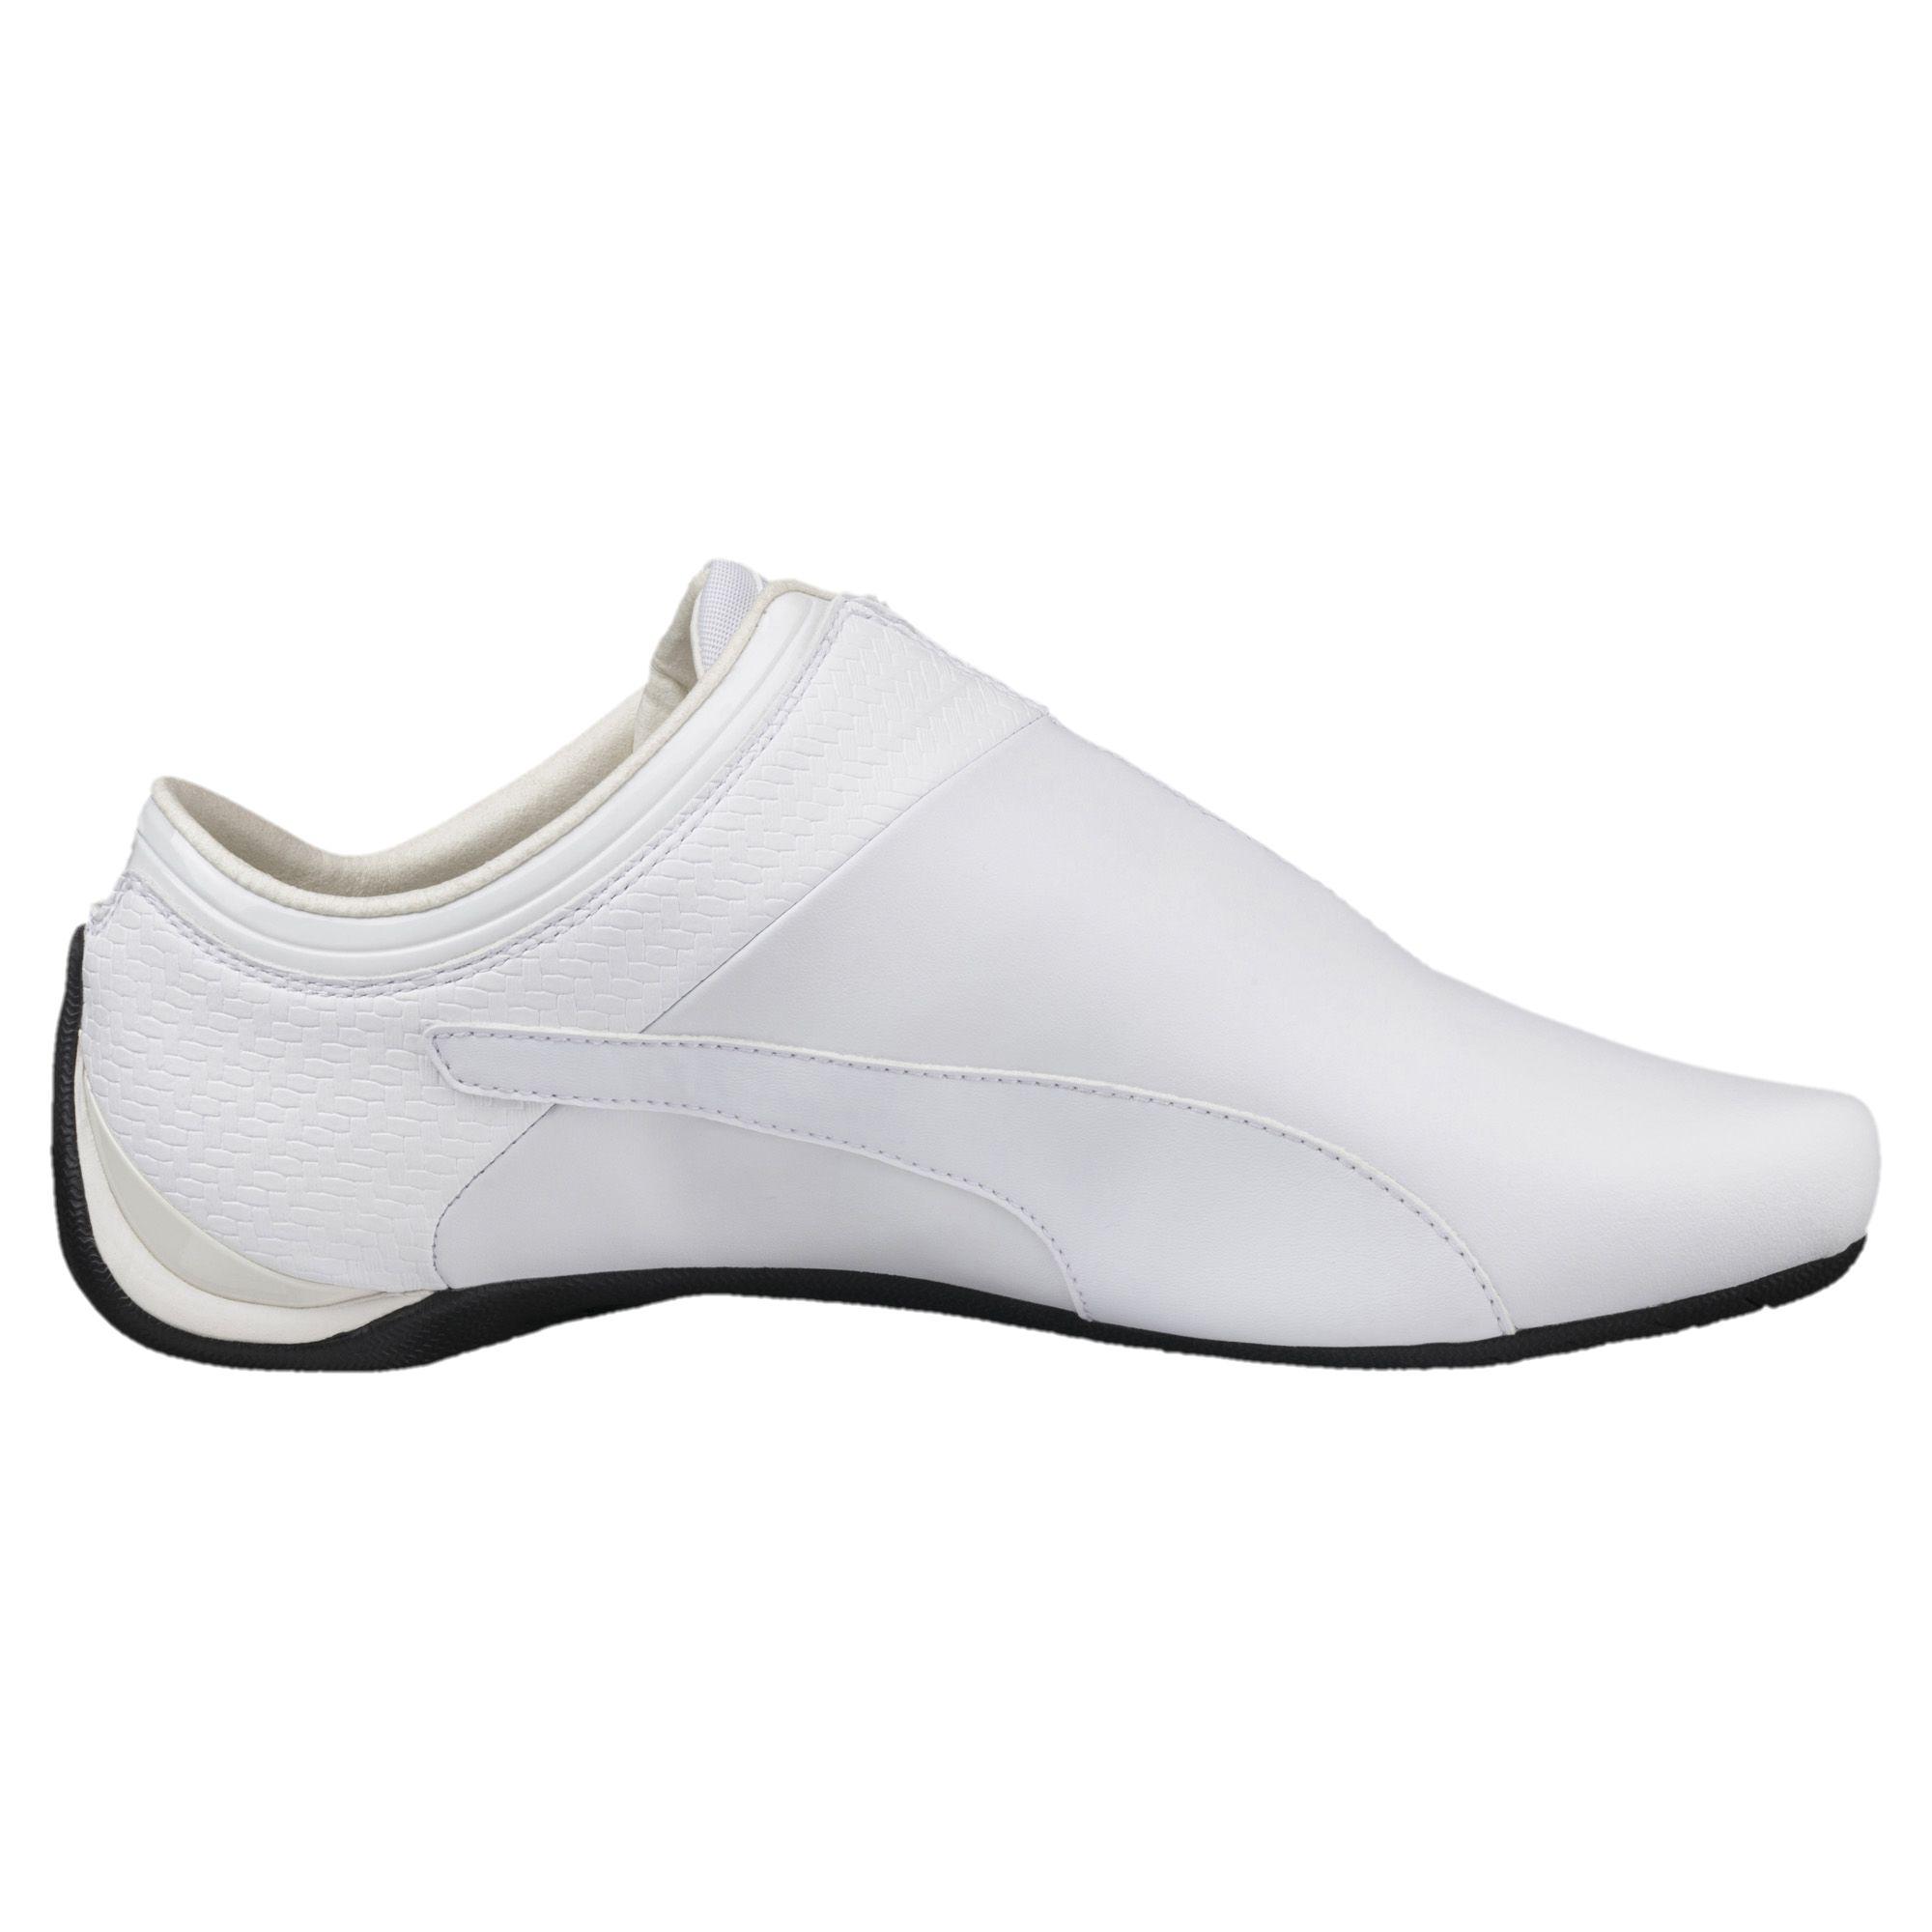 PUMA Leather Future Cat M1 Citi Pack Men's Shoes in White for Men - Lyst